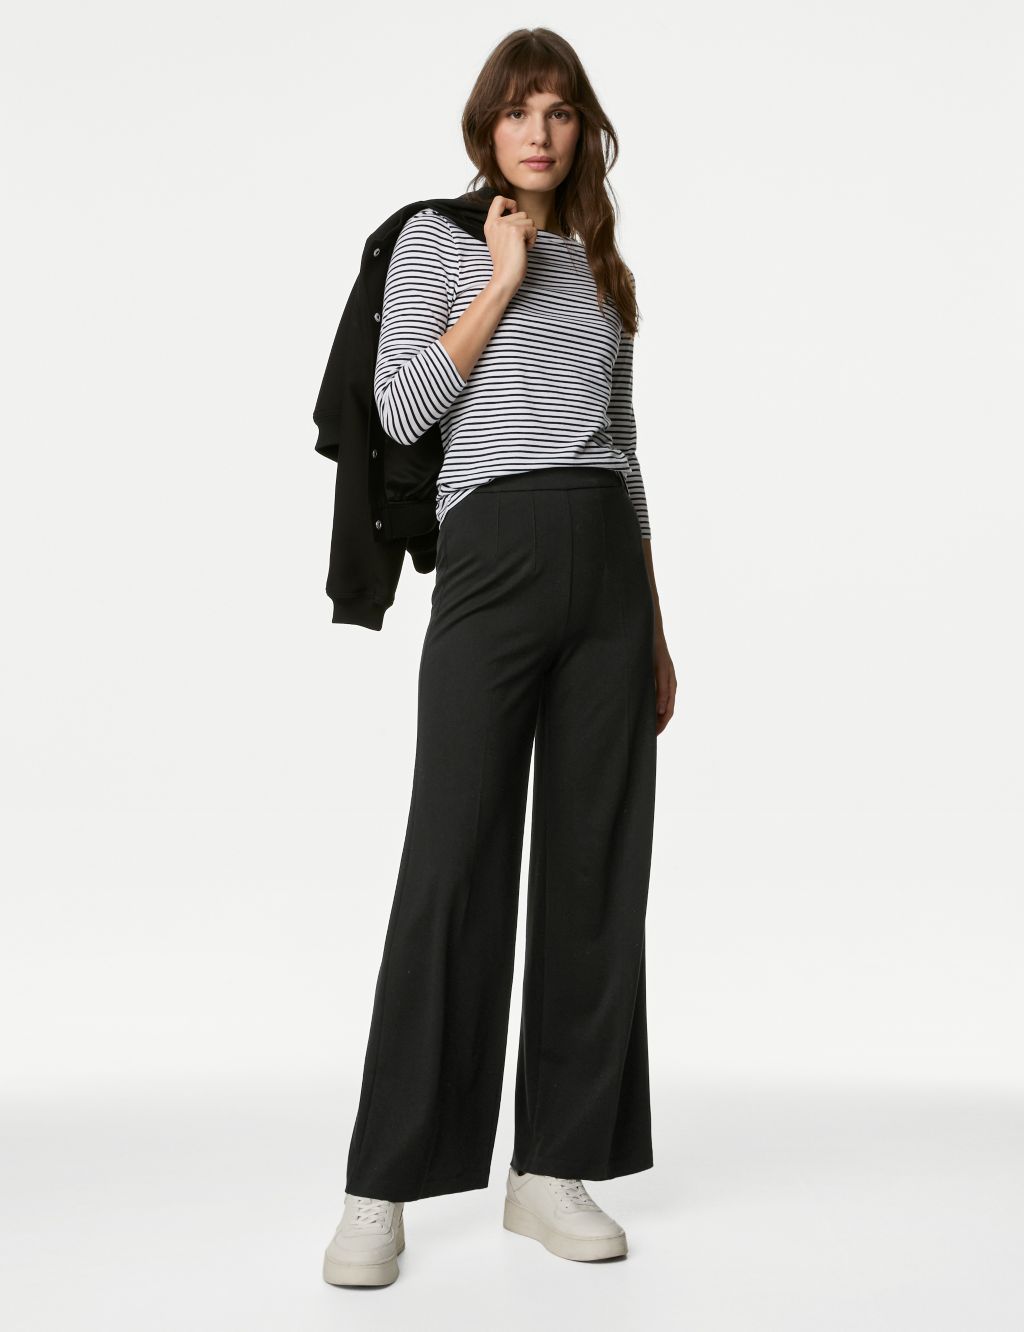 Womenswear trousers: short, wideleg or high waist